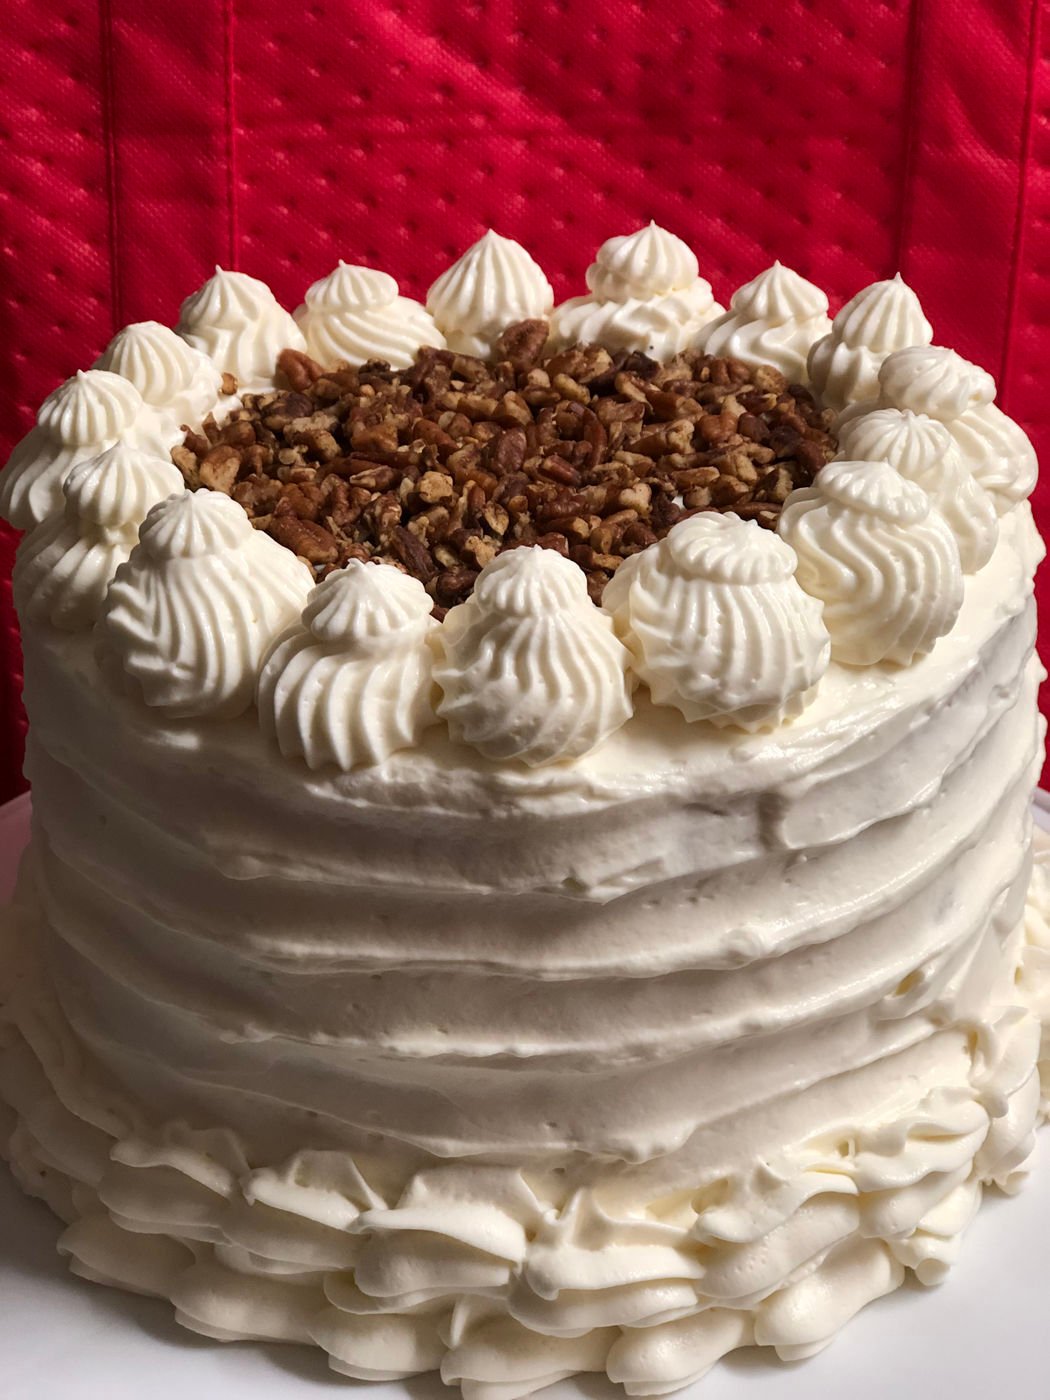 Celebrate Julia Child's 100th birthday with VIP cake